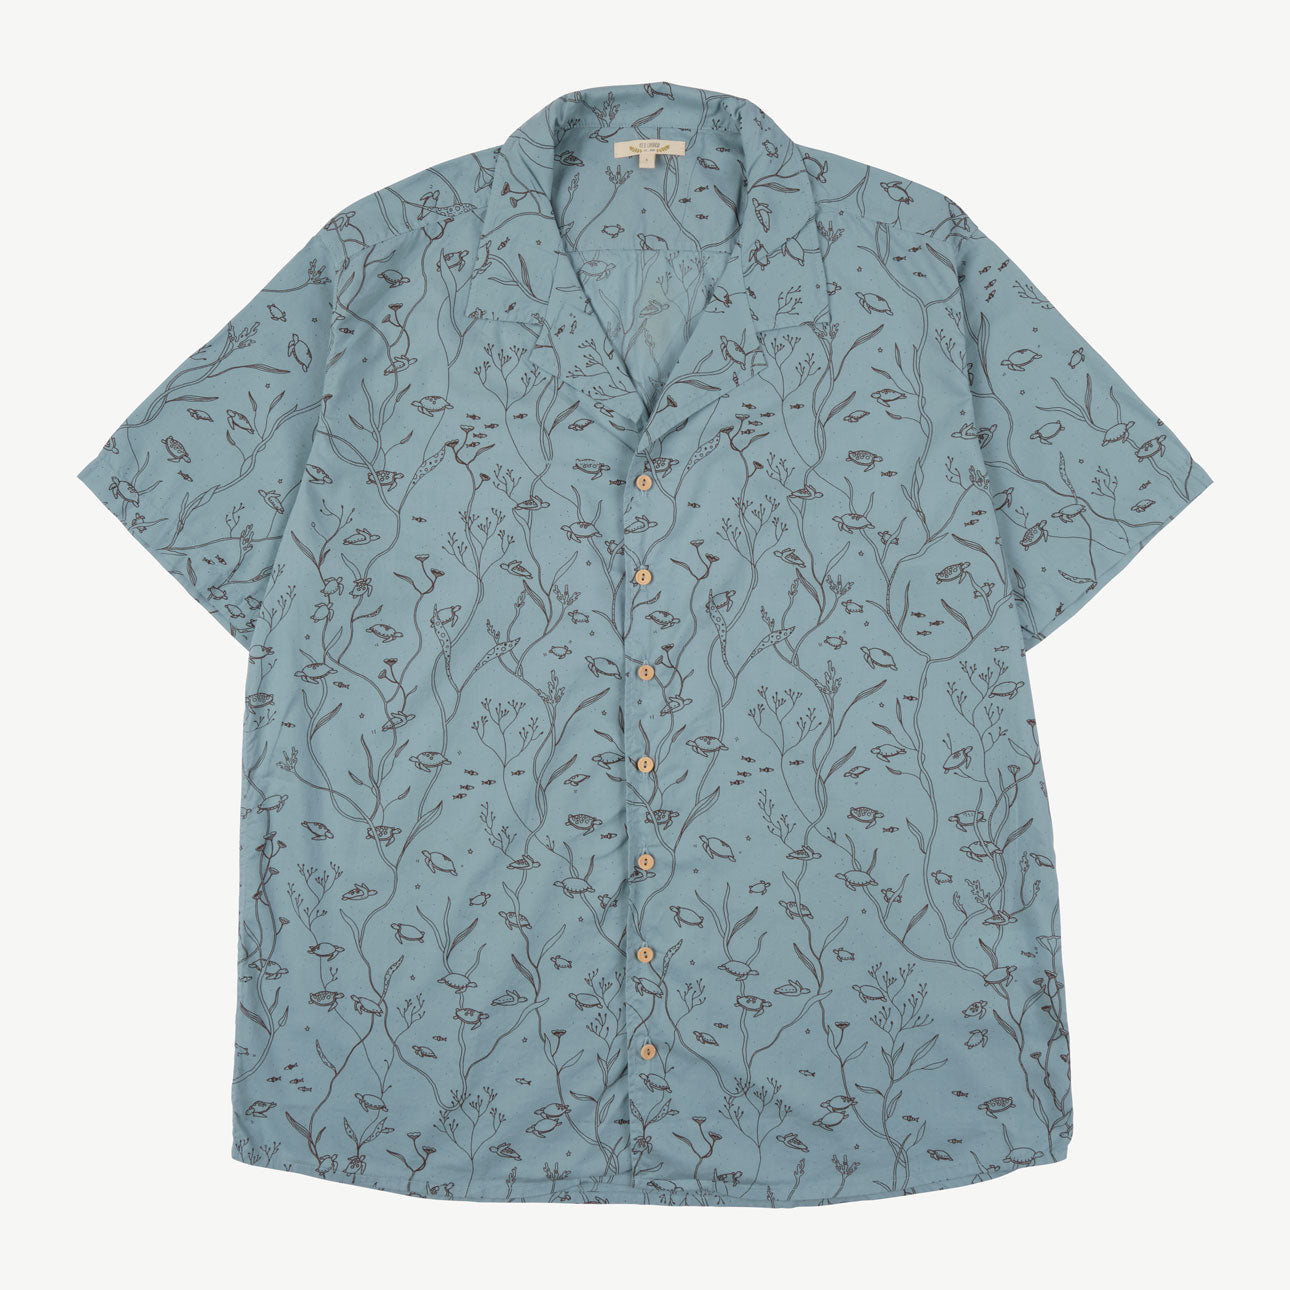 'sea turtles' arona woven shirt